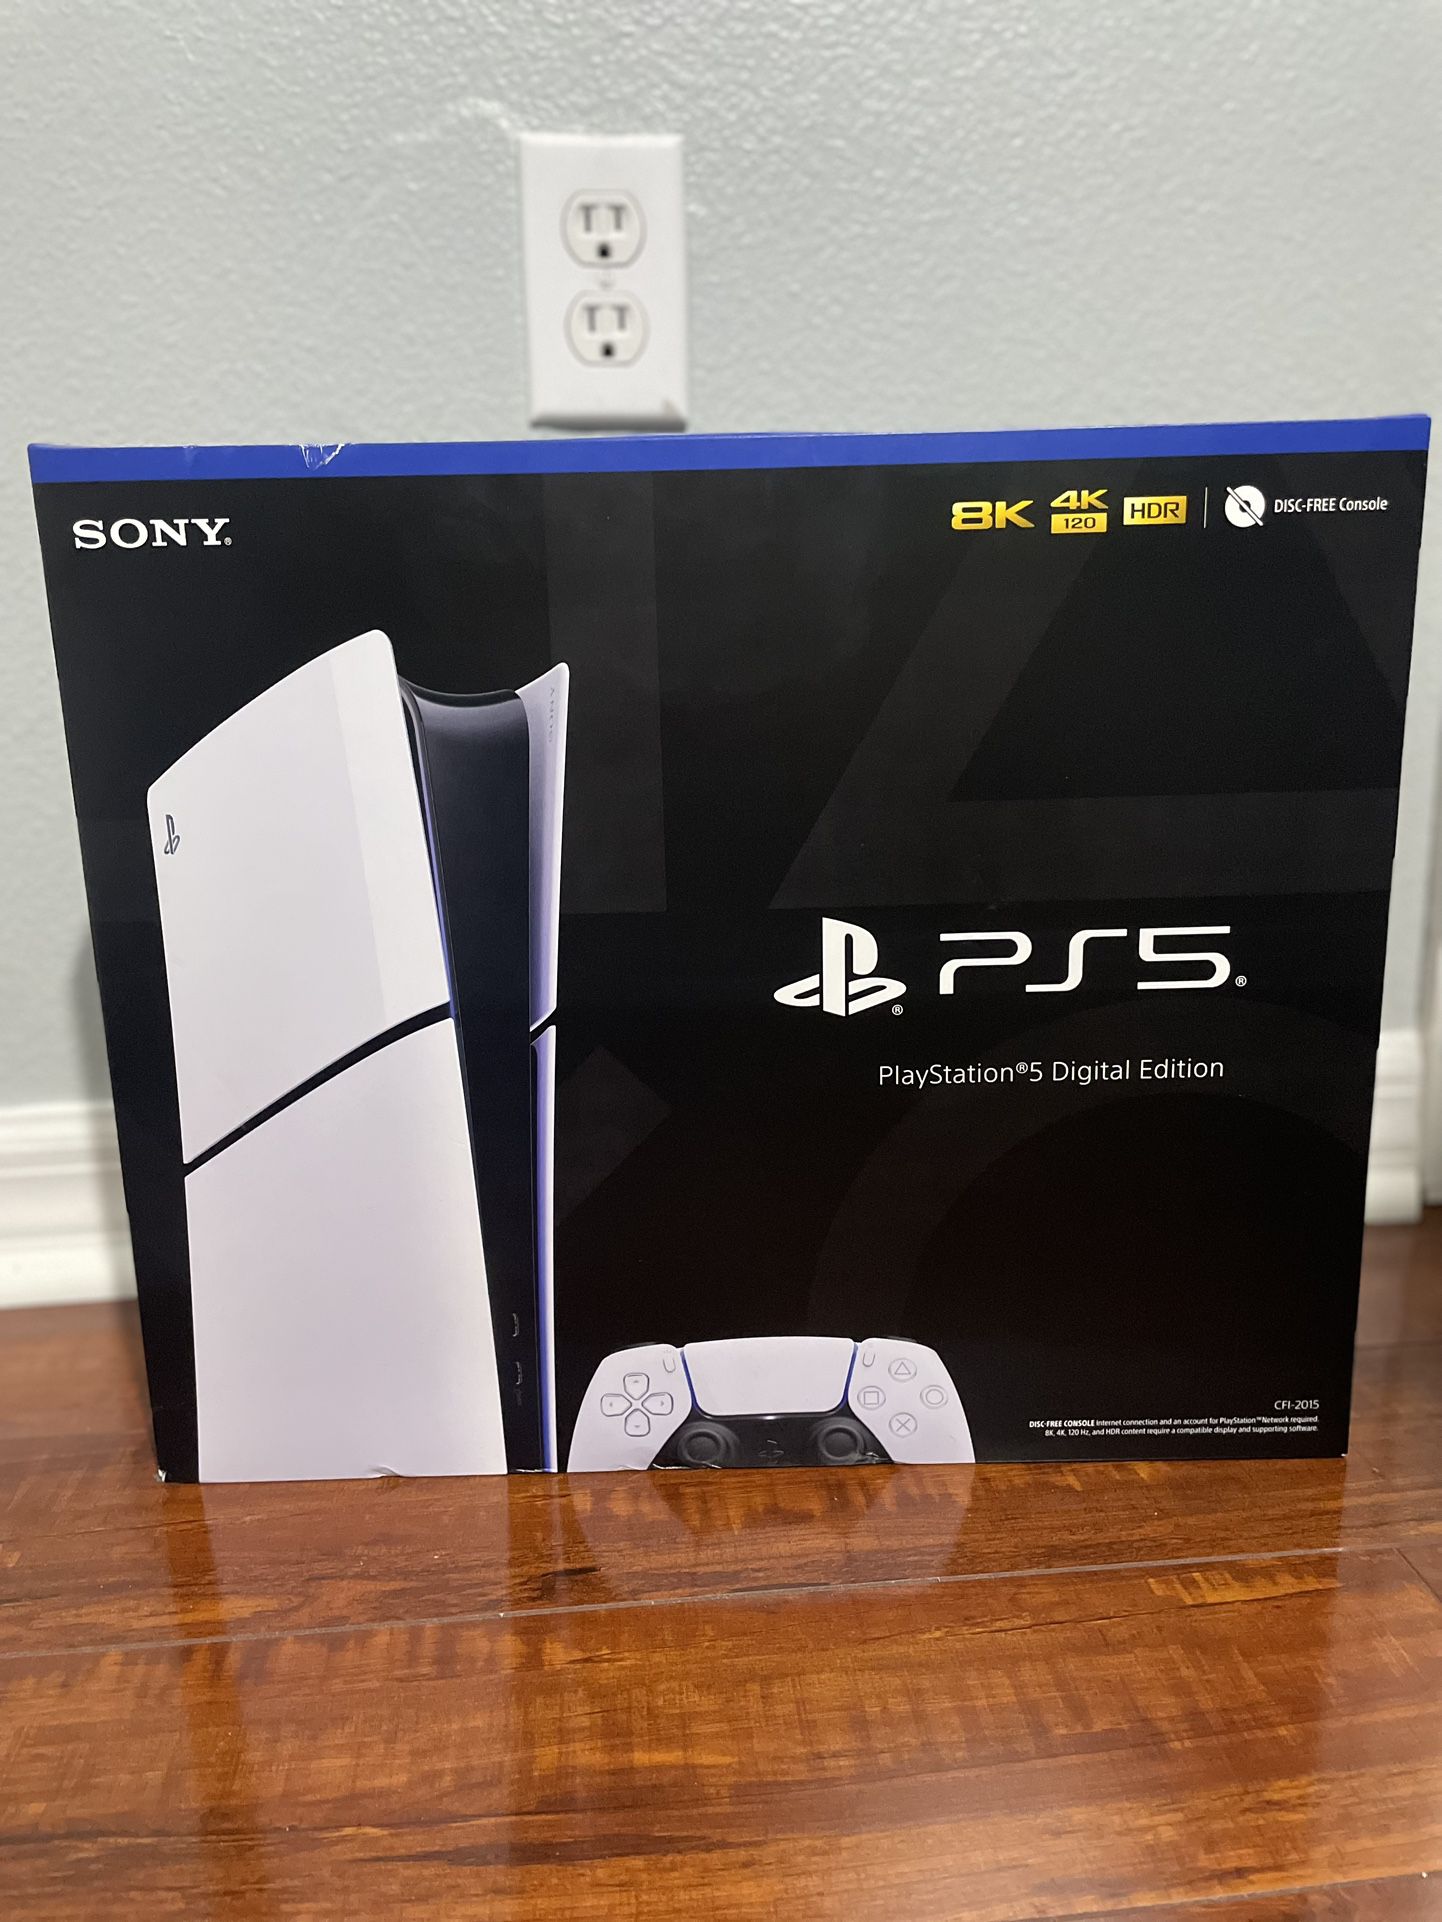 SONY. 4K 120 HDR DISC-FREE Console A755. PlayStation®5 Digital Edition